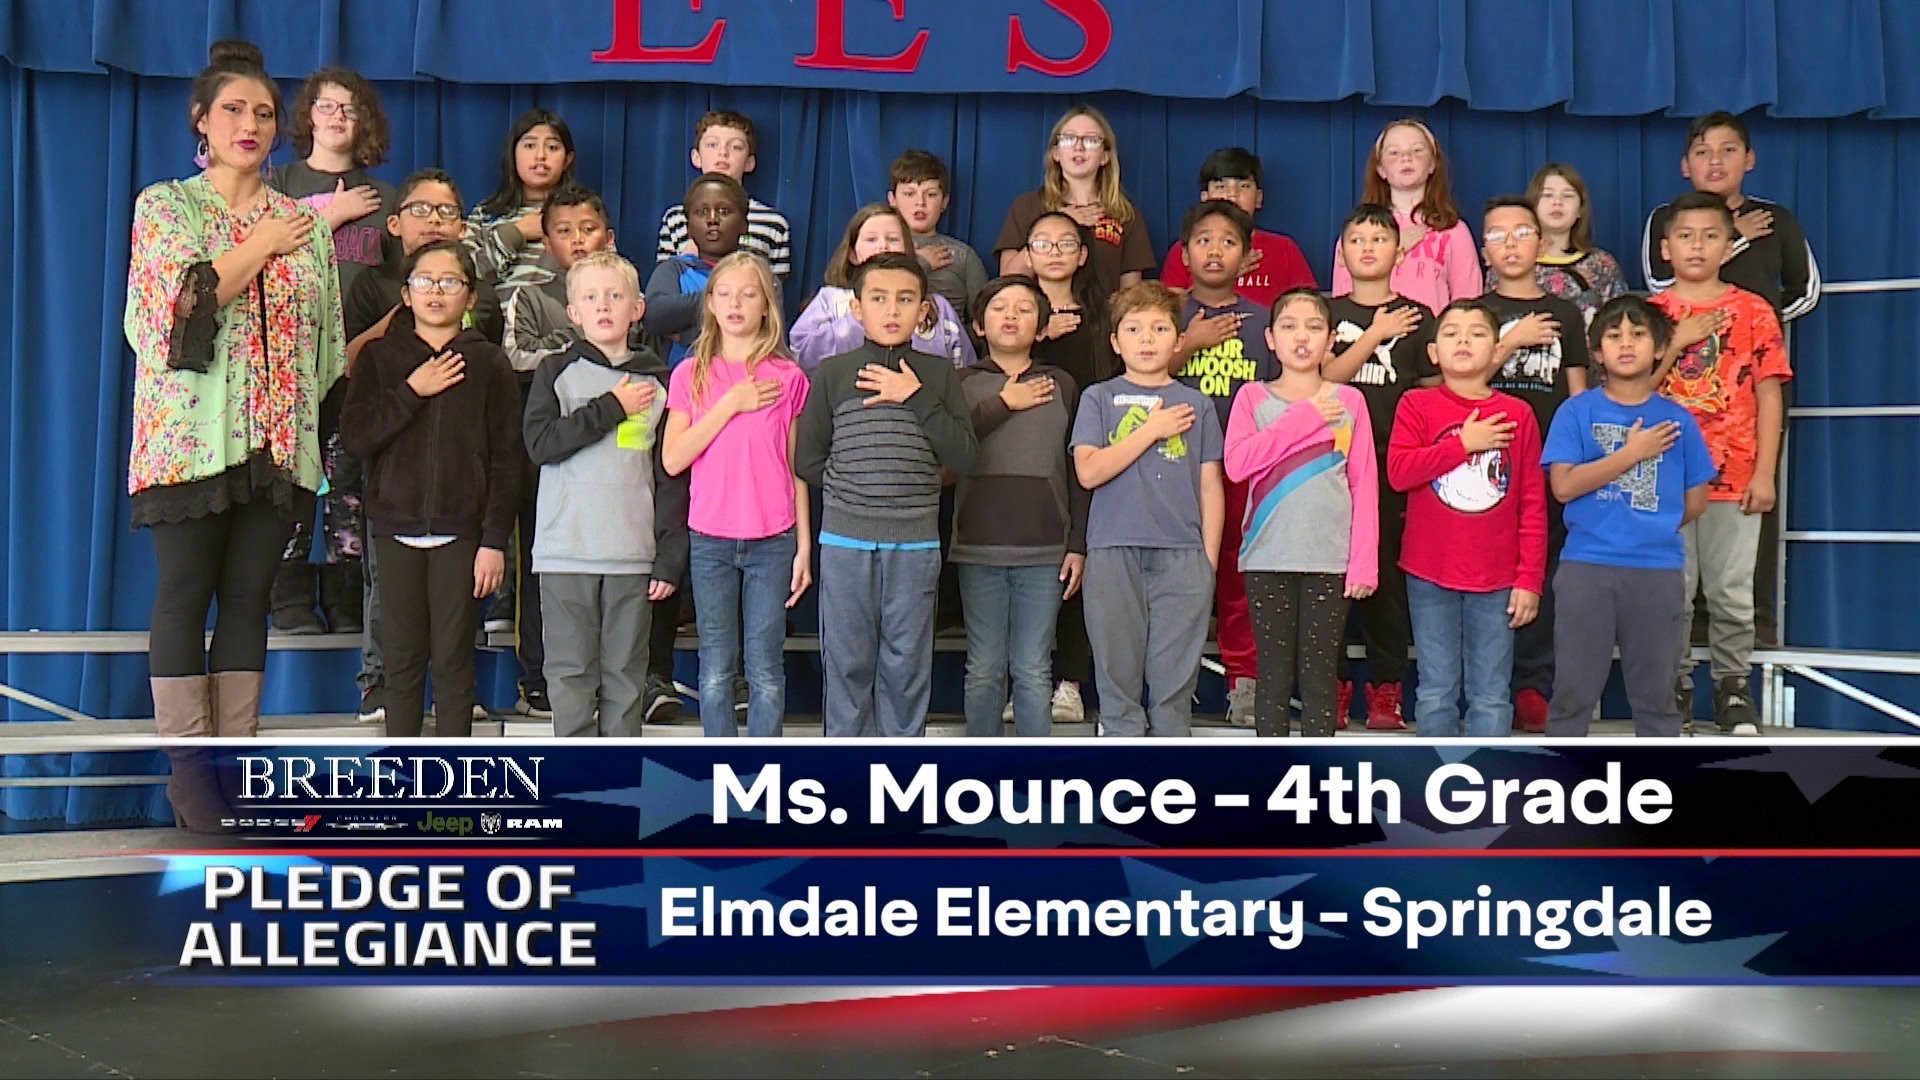 Ms. Mounce 4th Grade Elmdale Elementary, Springdale